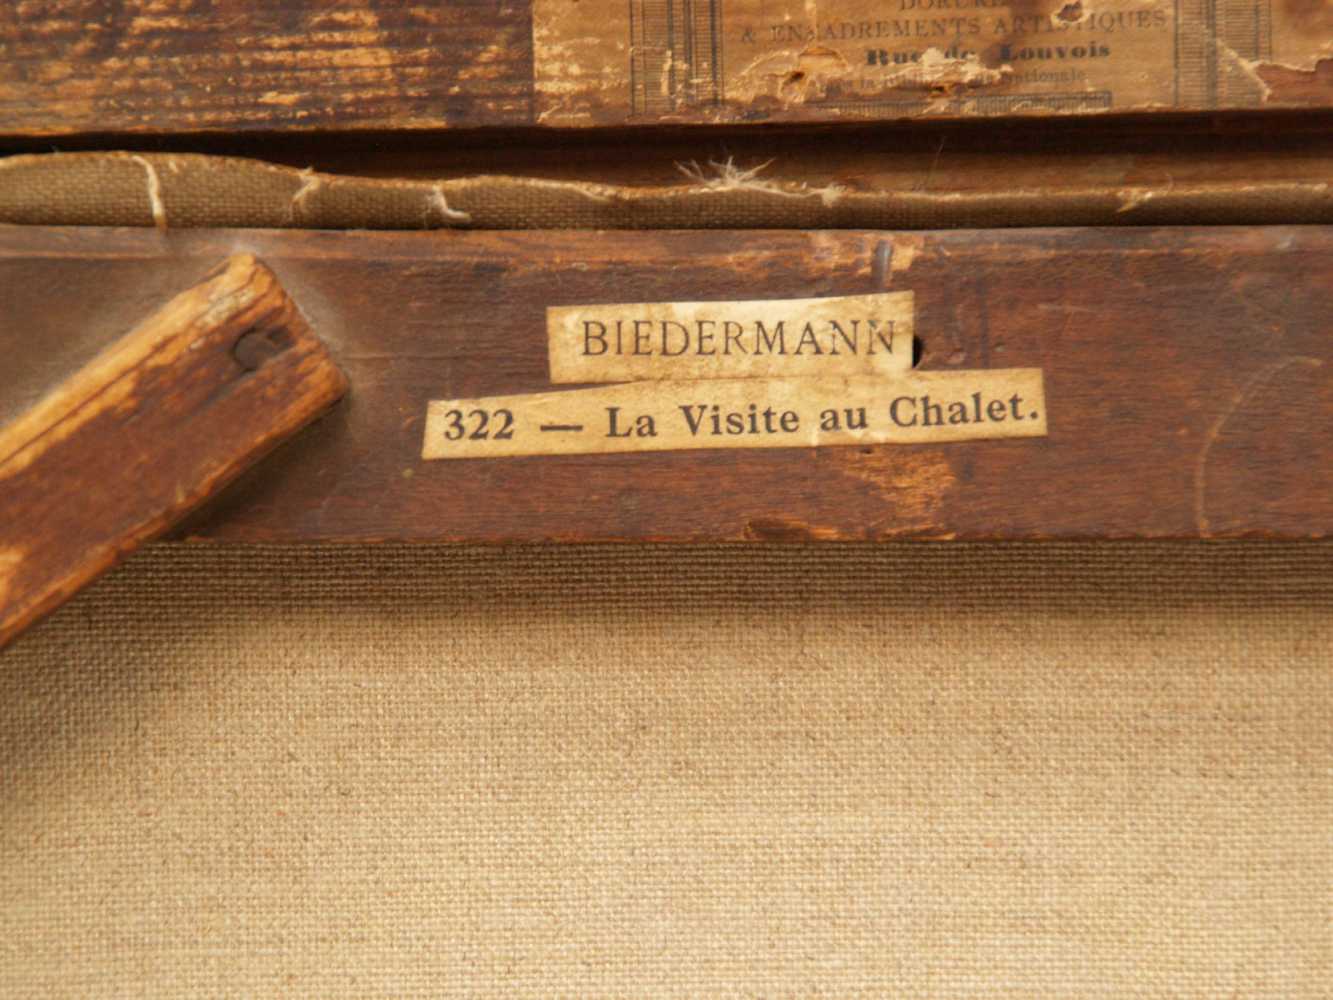 J.J.Biedermann -19.Jh.- La visite au chalet,Öl/Lwd,rechts unten signiert,in Rot dat.1850?, - Image 6 of 6